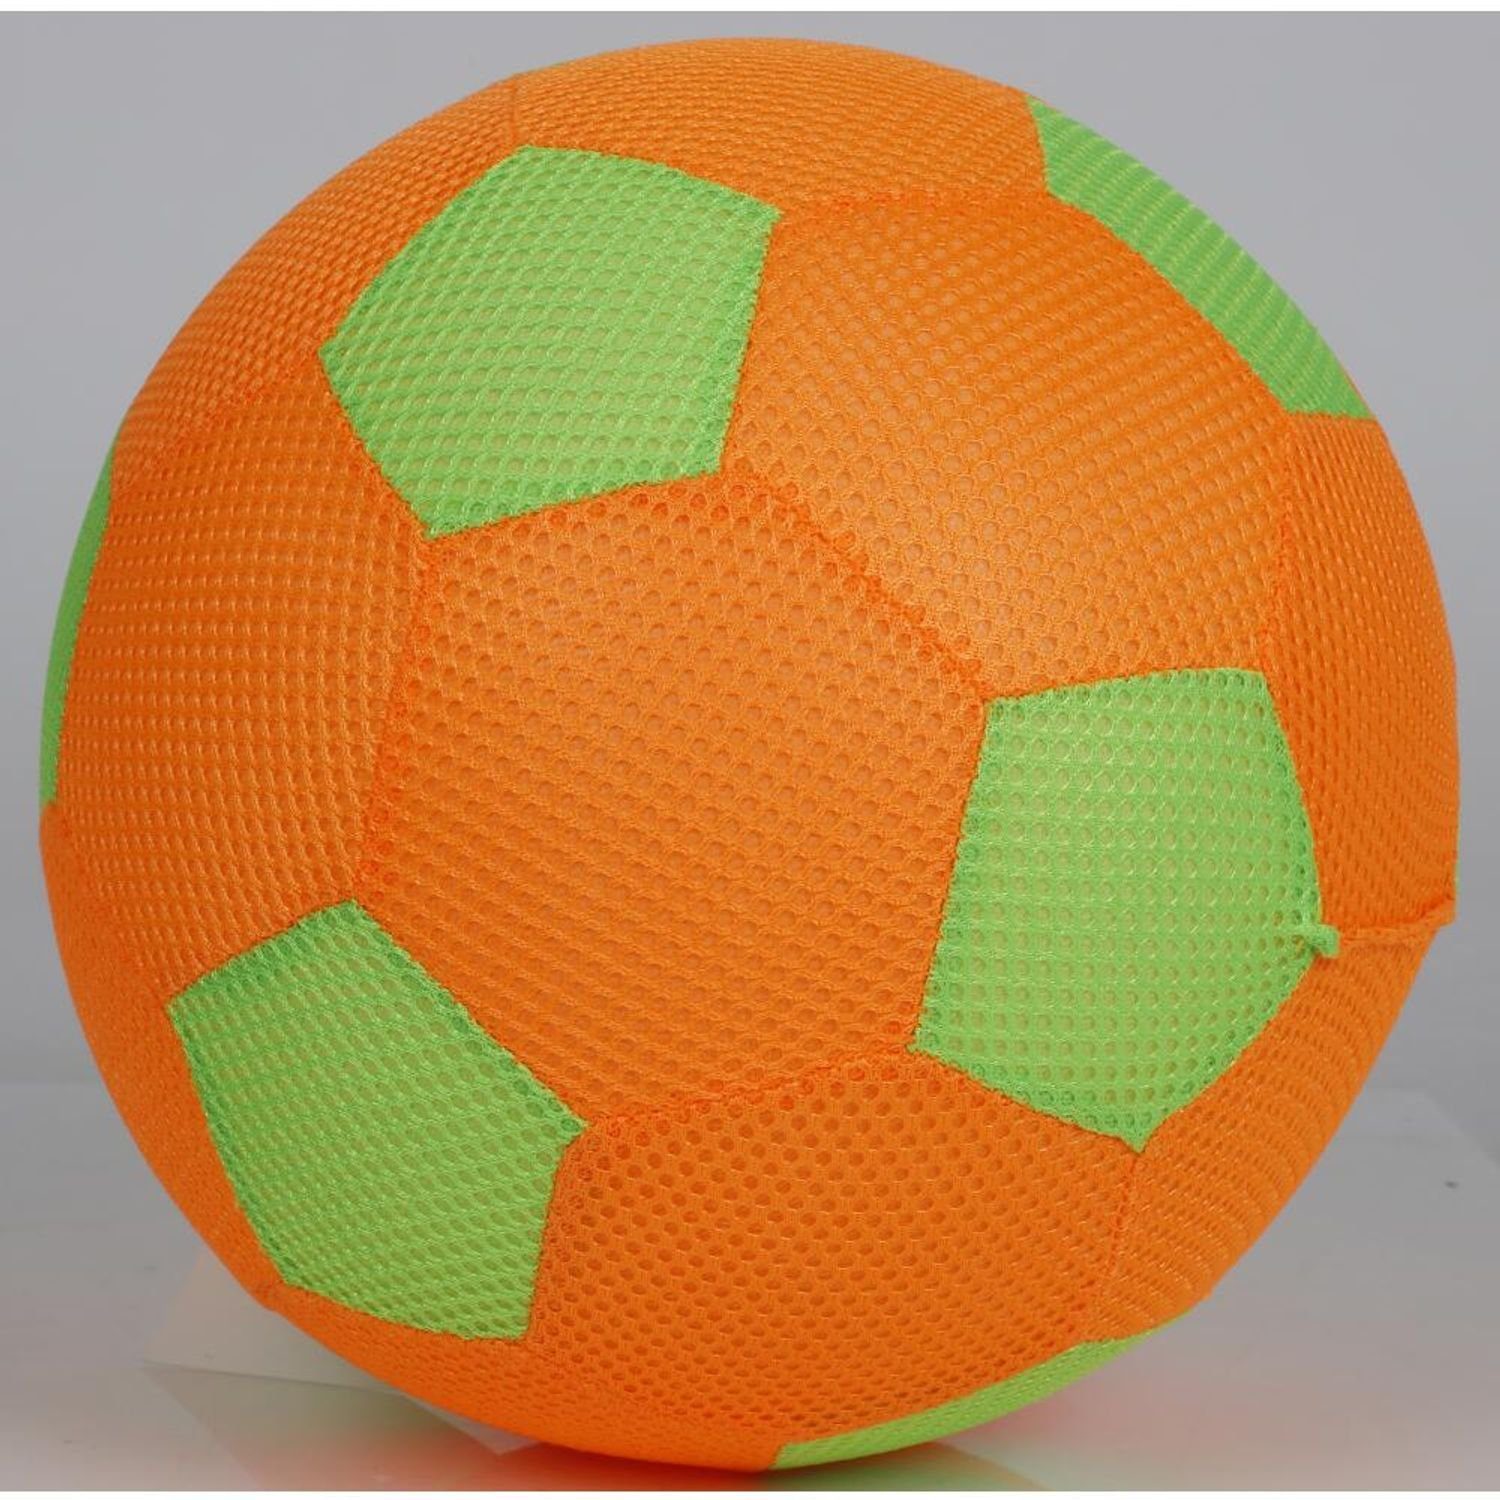 BURI Folienballon Meshball Spielball aufblasbar 22cm Softball Fußball Kinderball weich